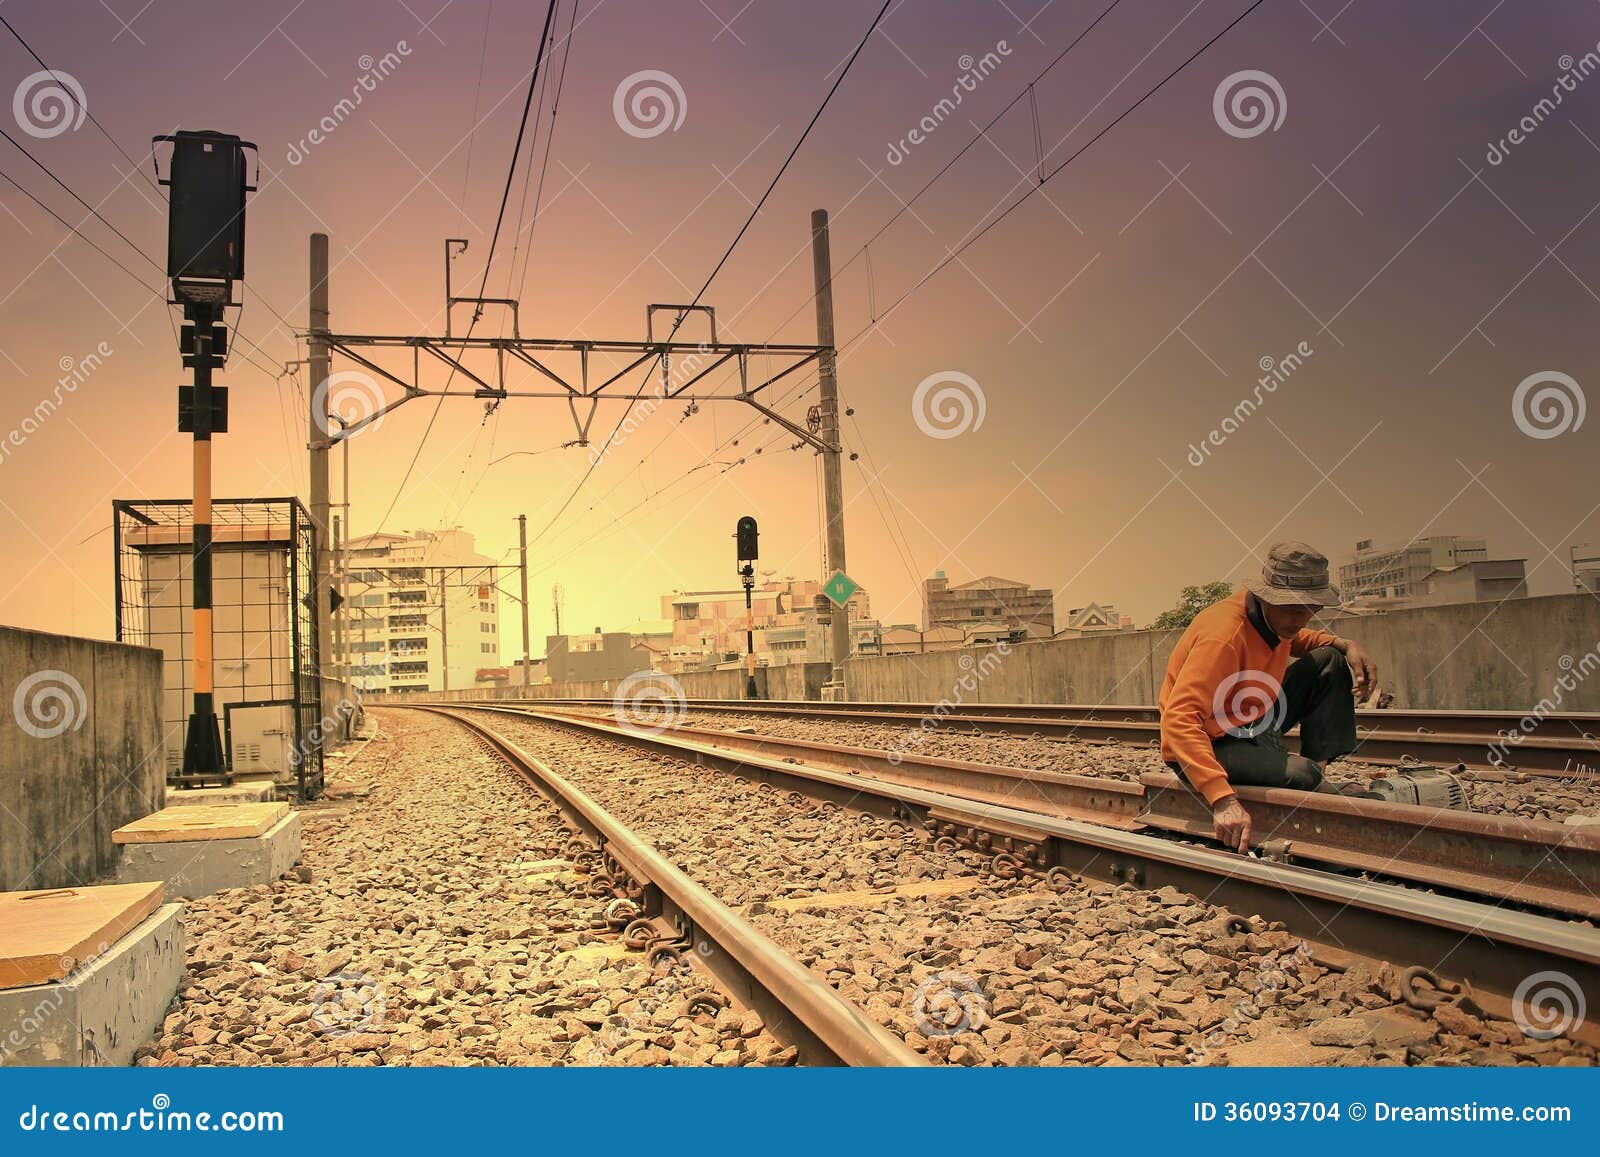 Railway Tracks Stretching Away Stock Image - Image of 